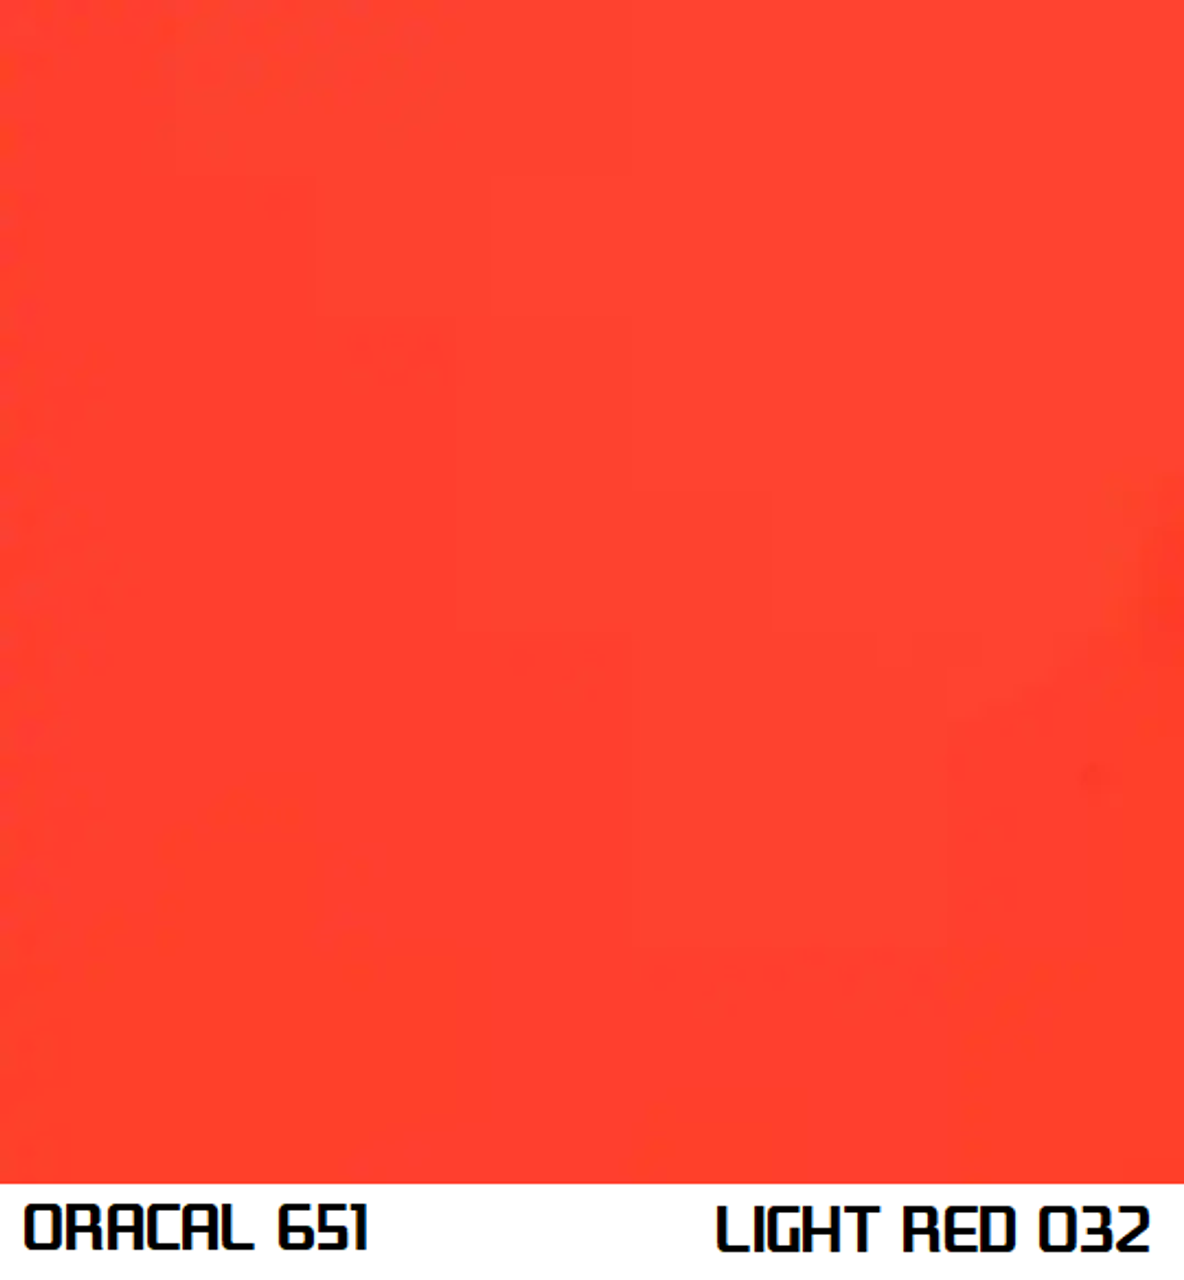 Oracal 651 Permanent Adhesive Vinyl Gloss - Light Red 032 - JDMFV WRAPS